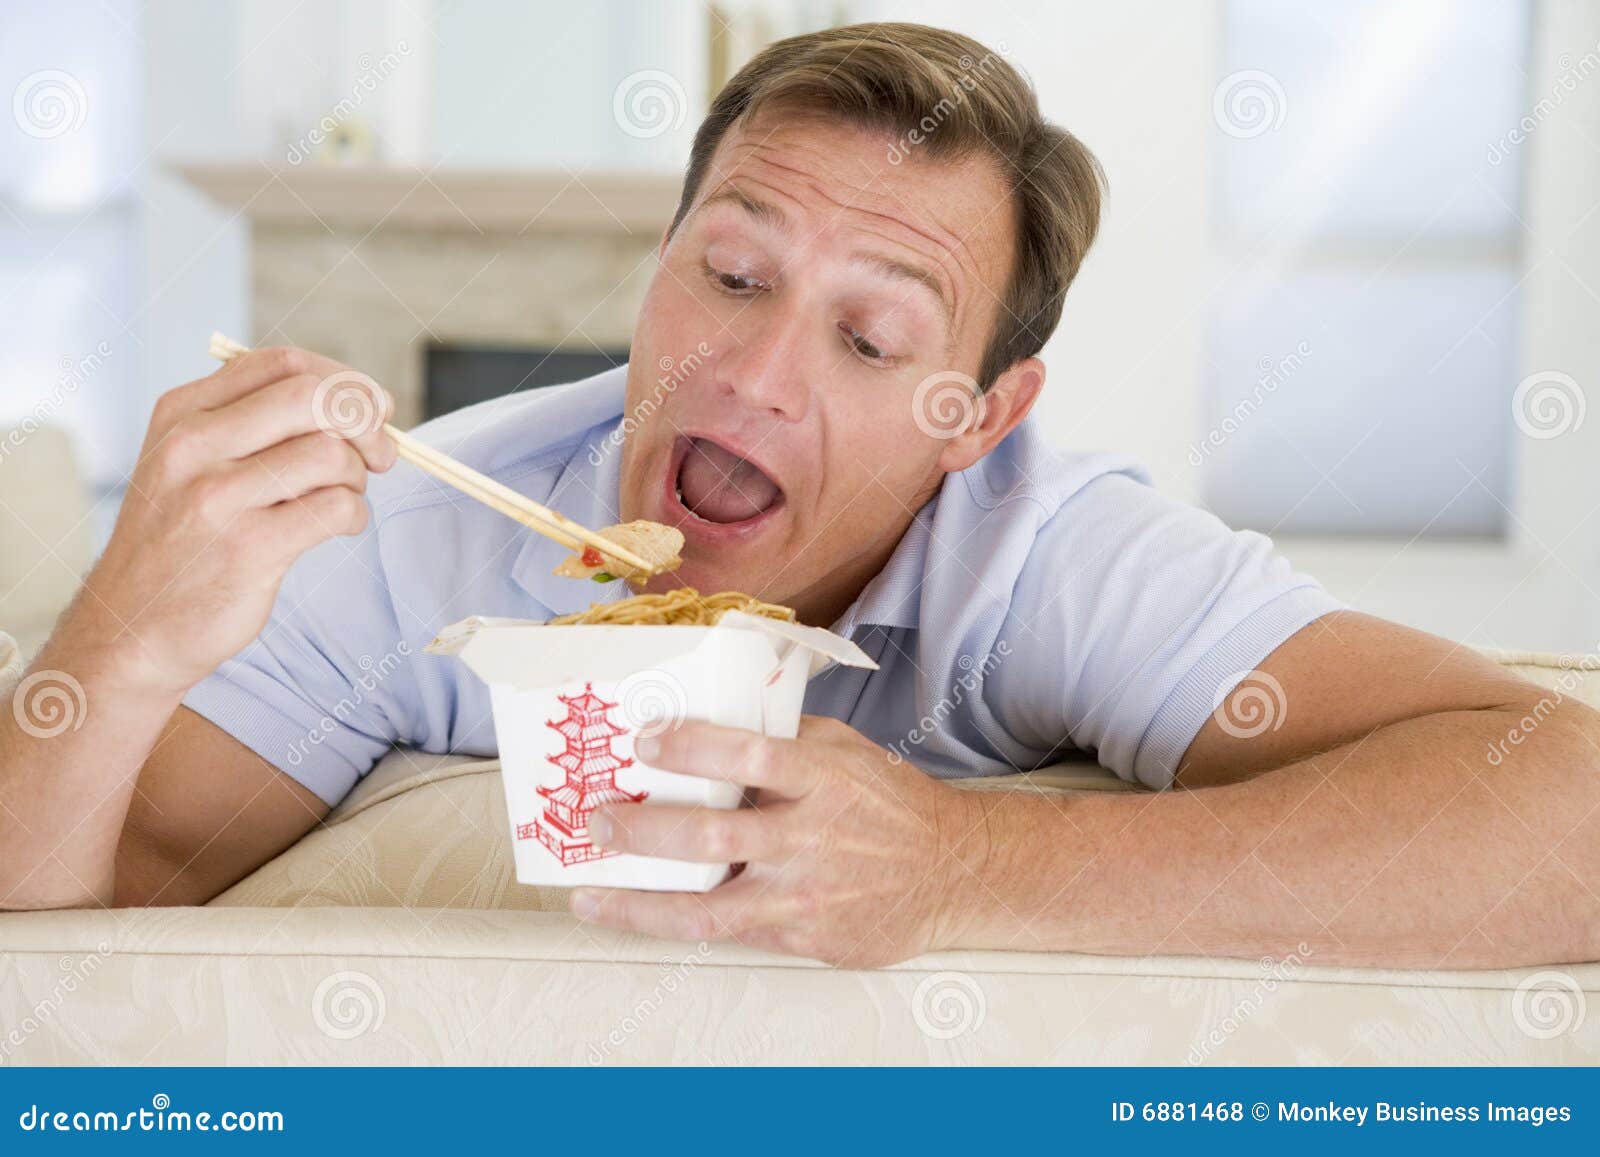 Man Eating with Chopsticks